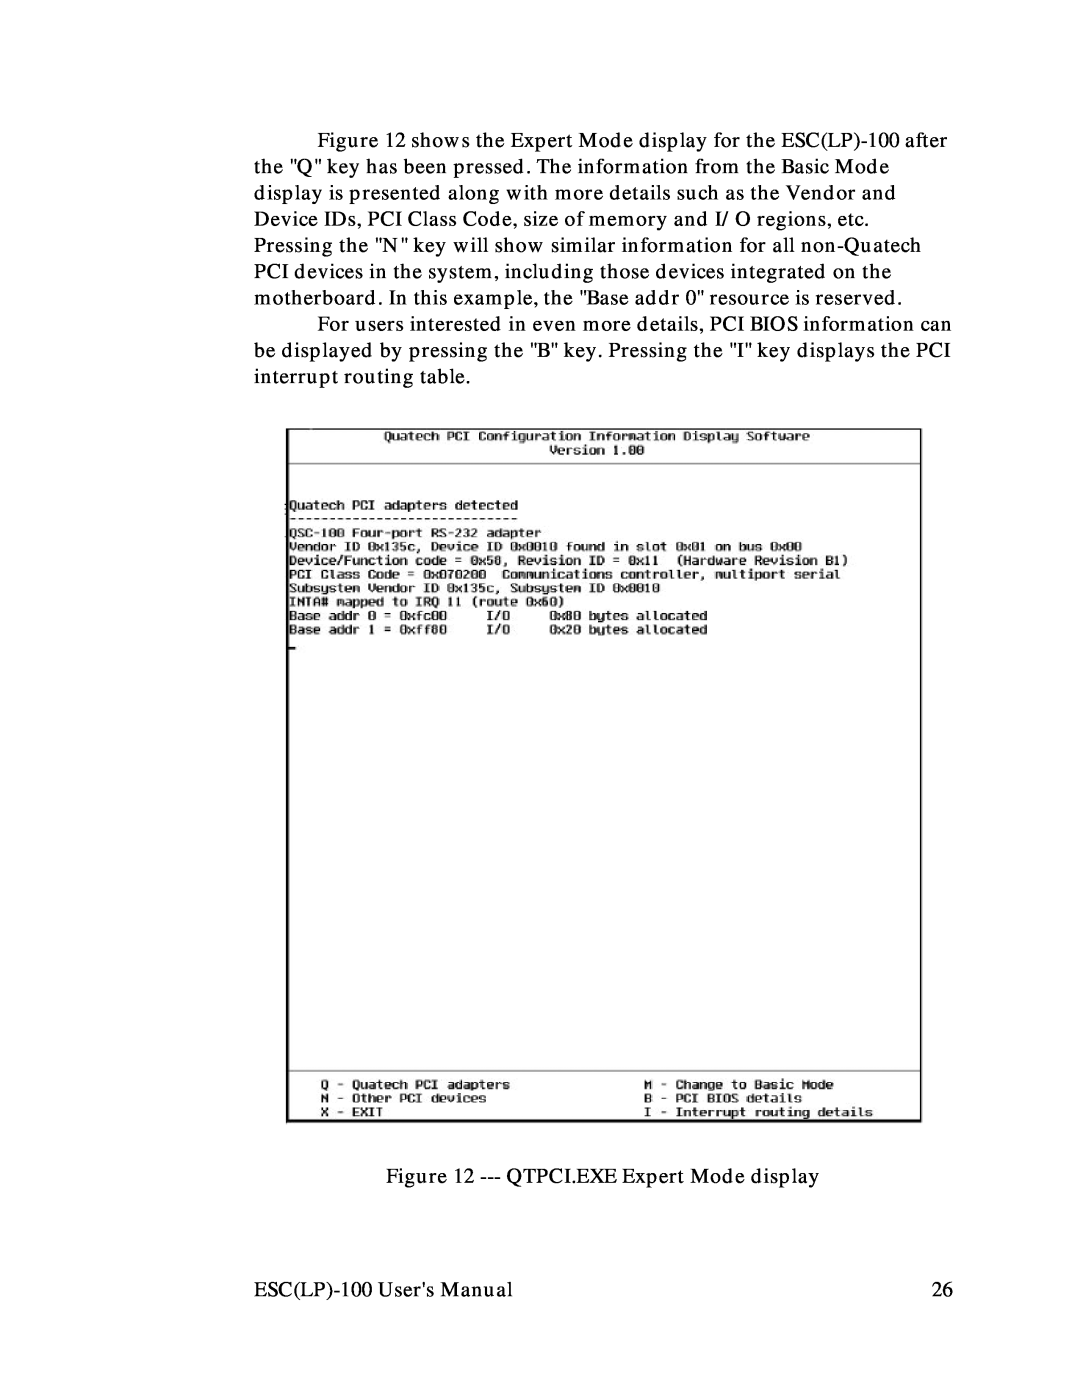 Quatech RS-232 user manual QTPCI.EXE Expert Mode display, ESCLP-100 Users Manual 